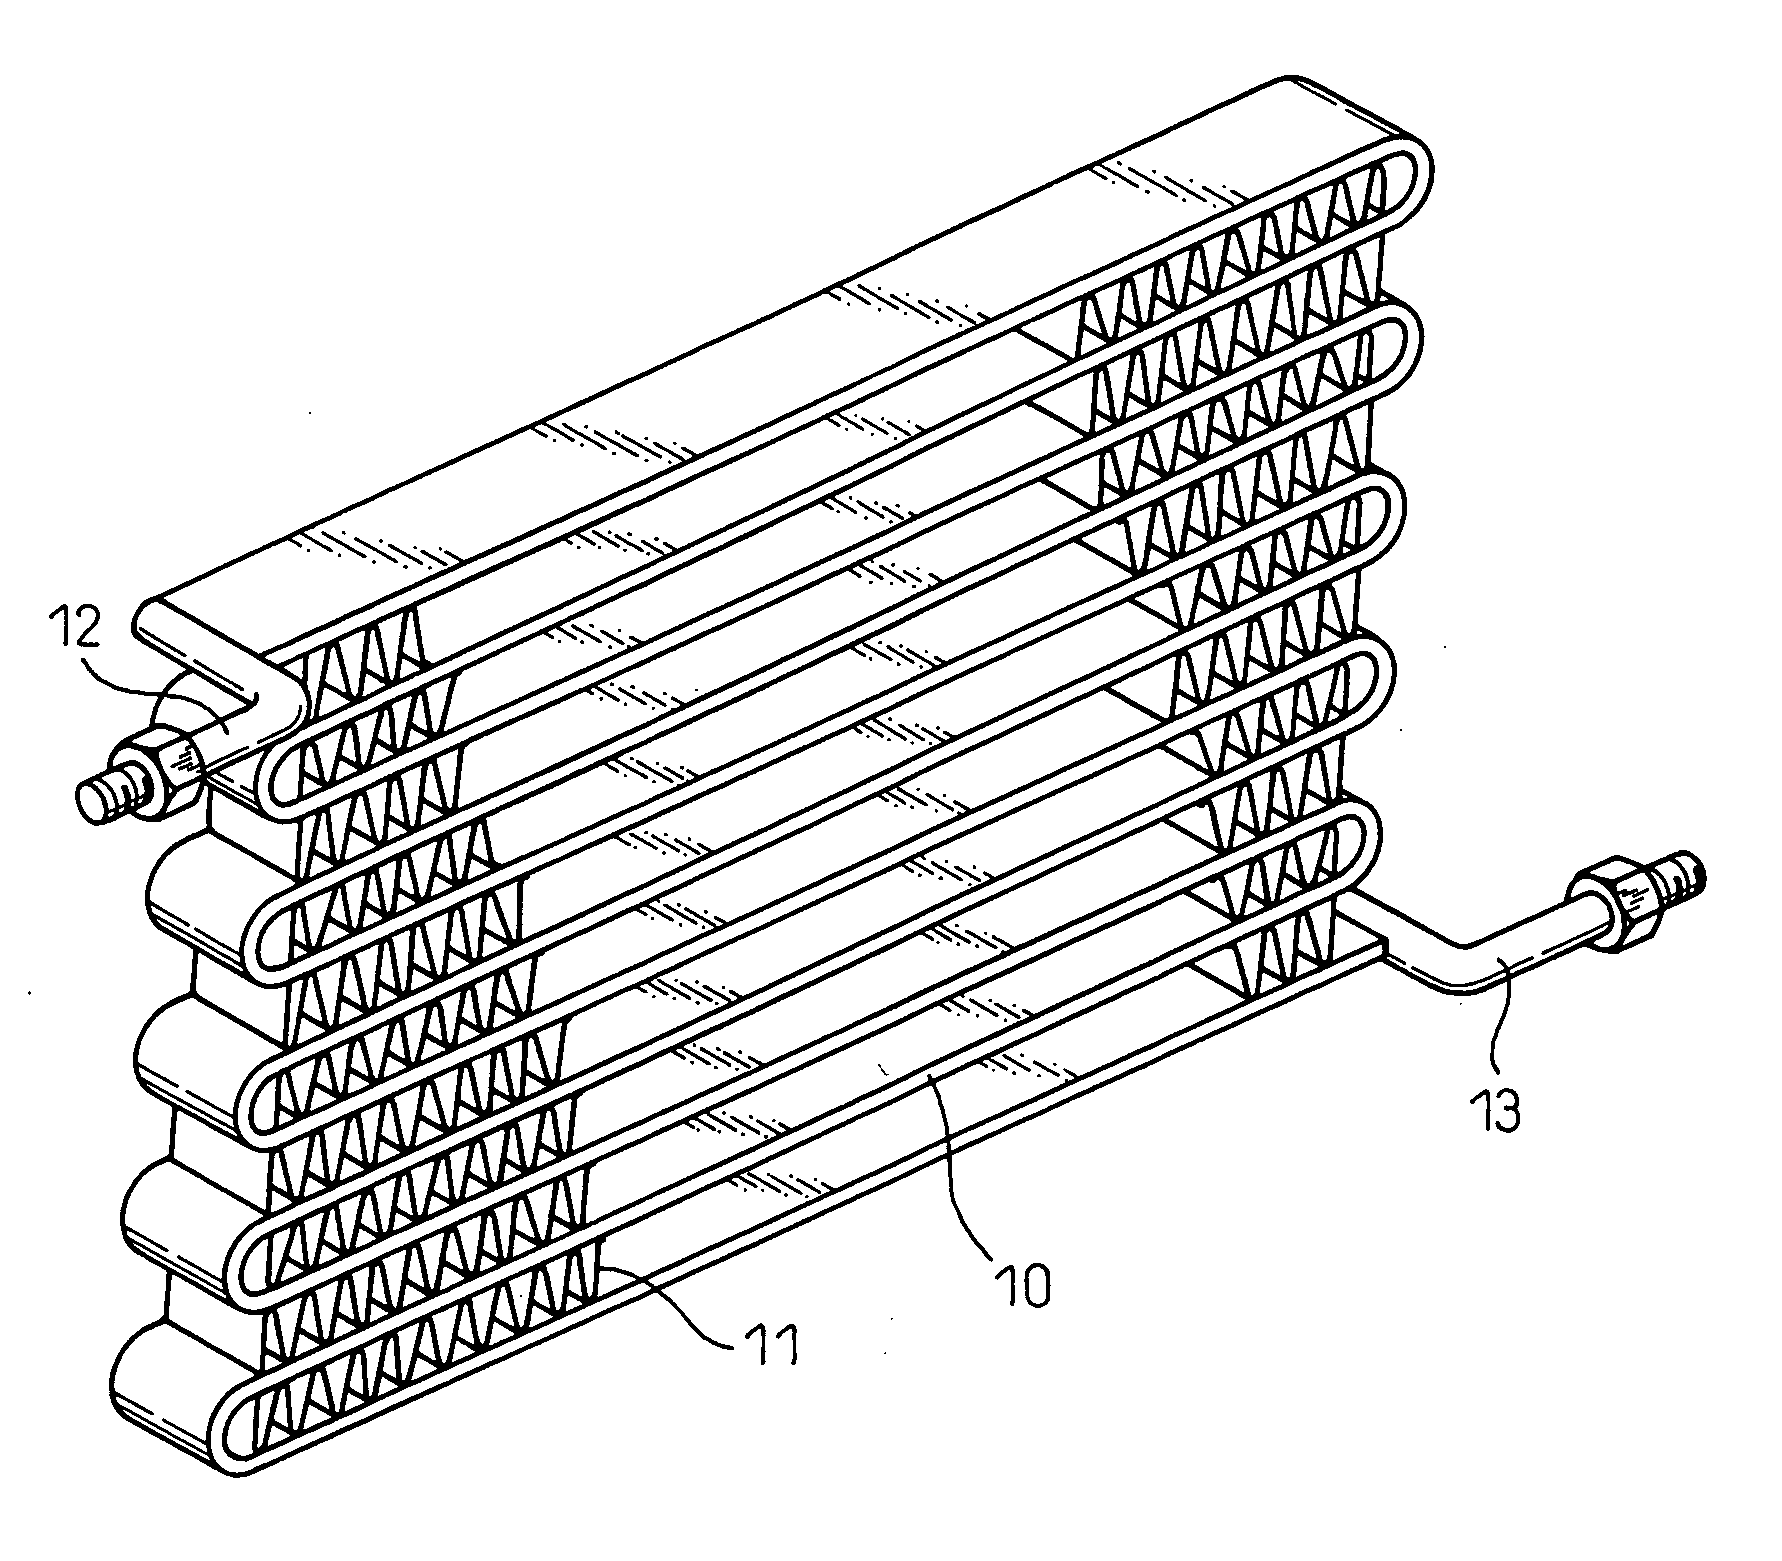 Method for manufacturing aluminum heat exchanger